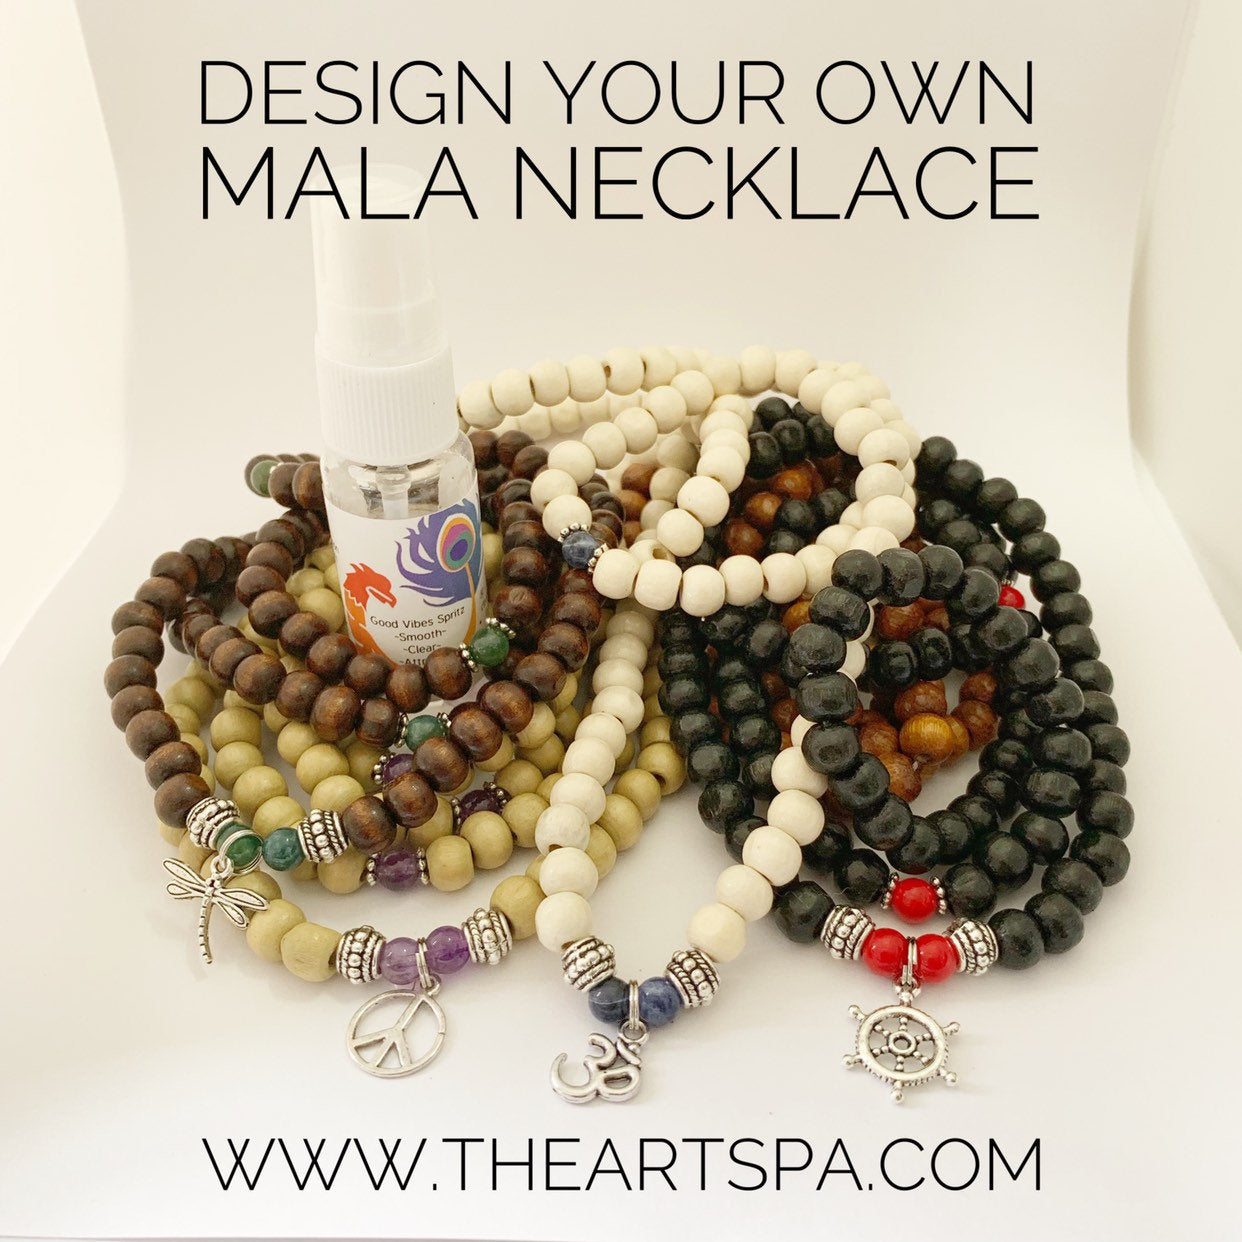 Design Your Own Mala Necklace - Includes Good Vibes Spritz - 108 Beads - Prayer Beads - Mala Beads - Meditation Talisman